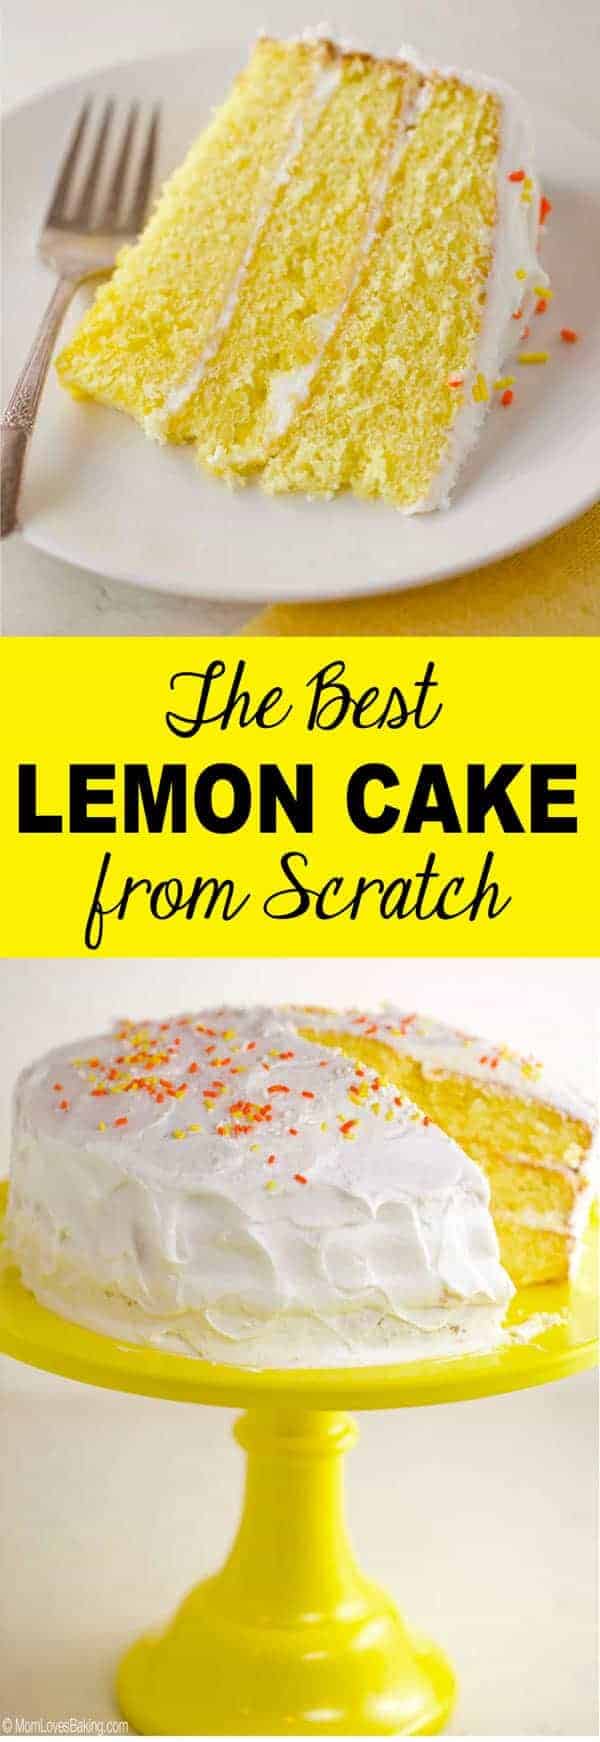 Really delicious lemon cake